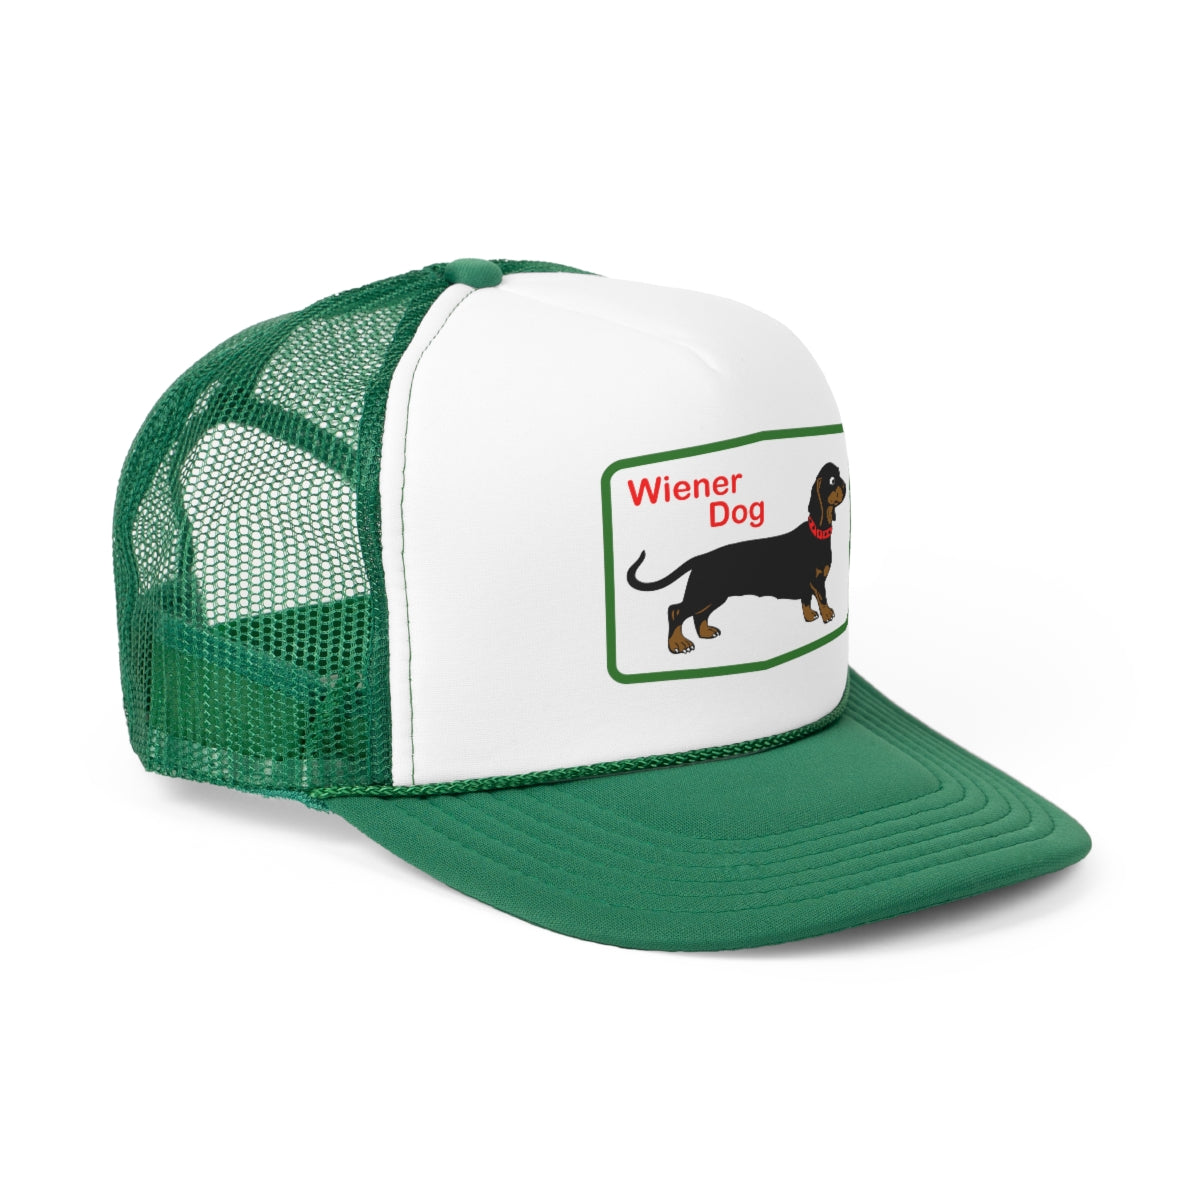 Wiener Dog Trucker Hat